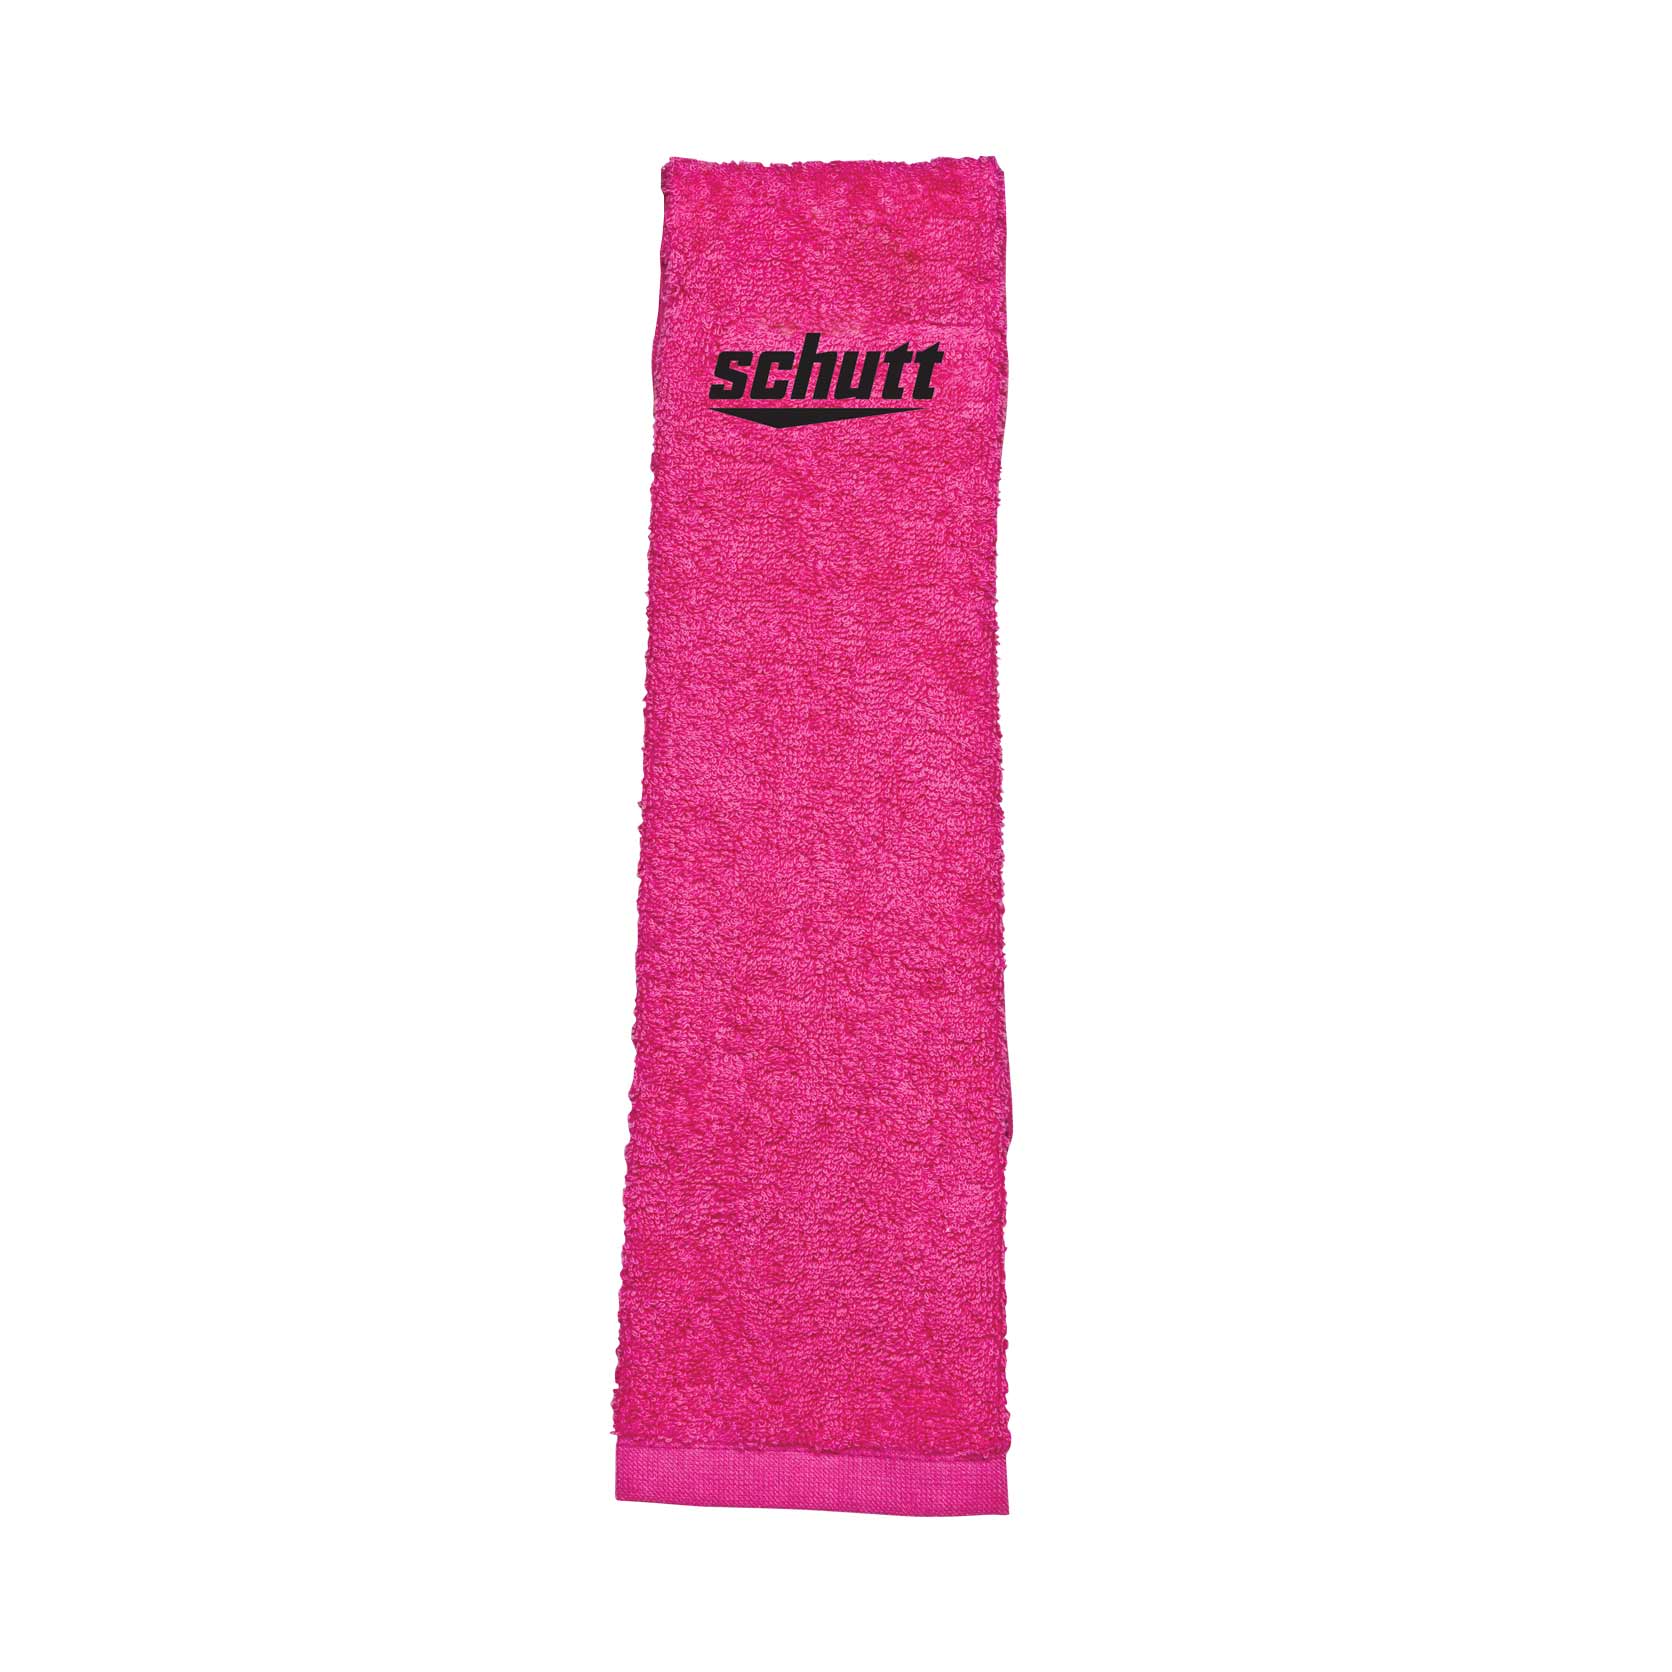 Schutt Game Day Towel - Pink